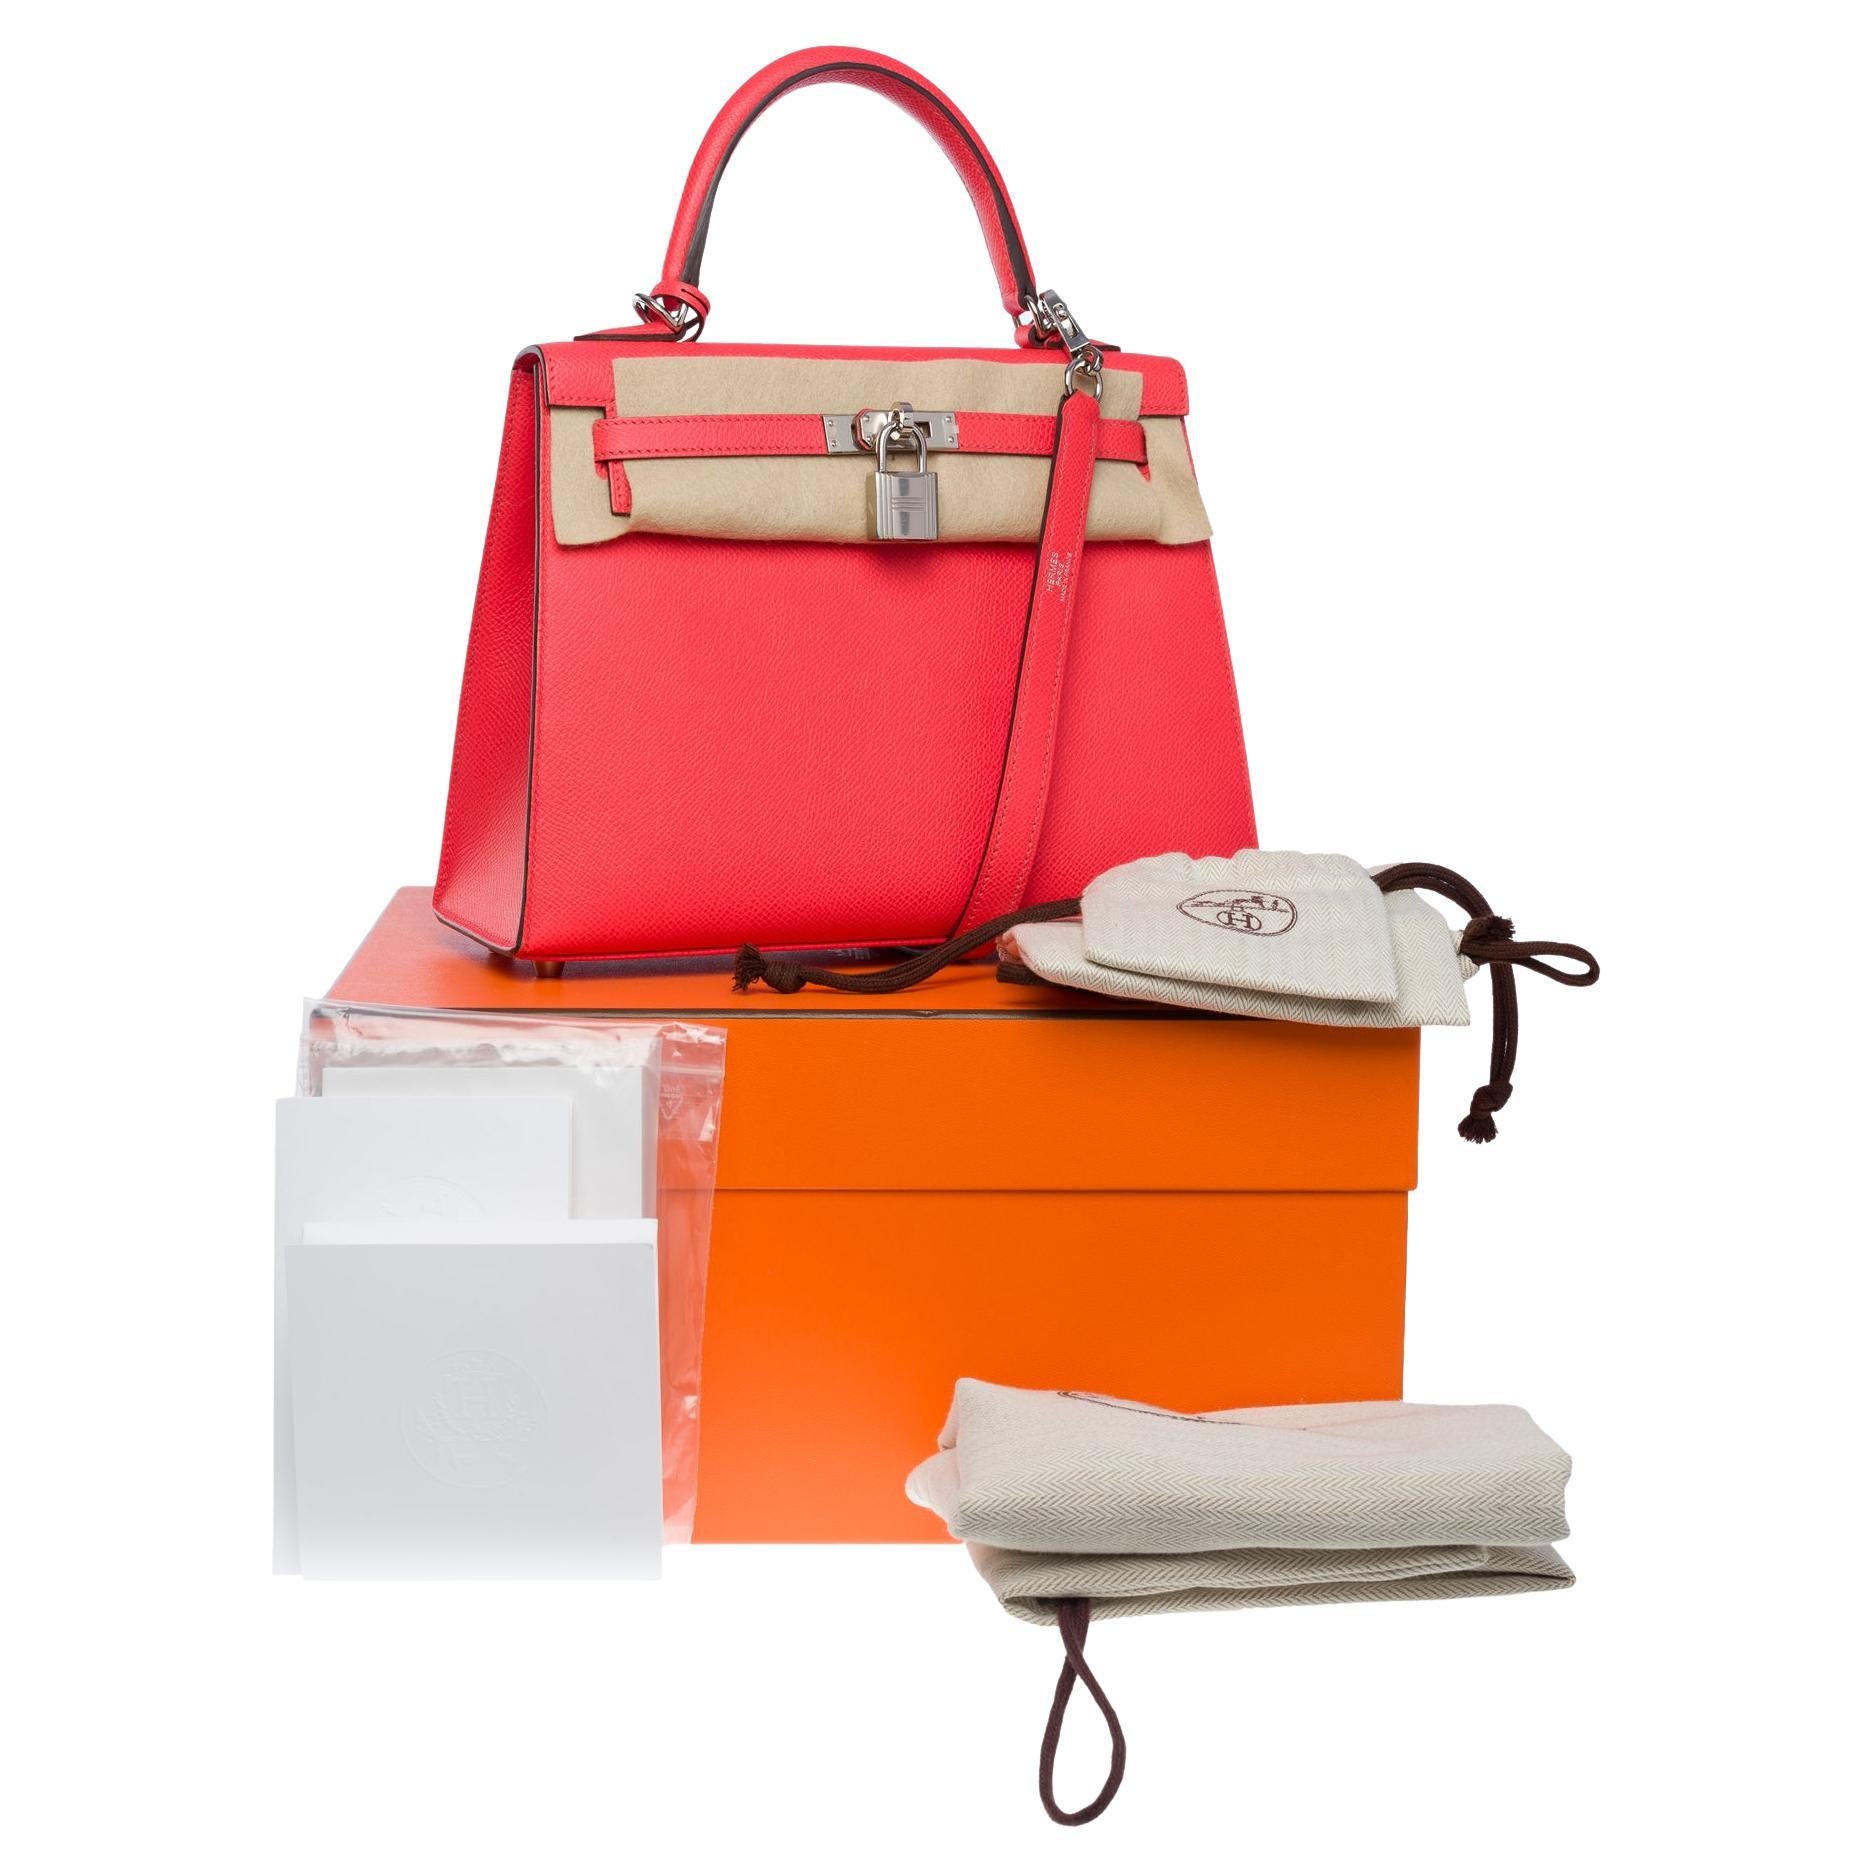 New Amazing Hermès Kelly 25 handbag strap in Pink Texas epsom leather, SHW For Sale